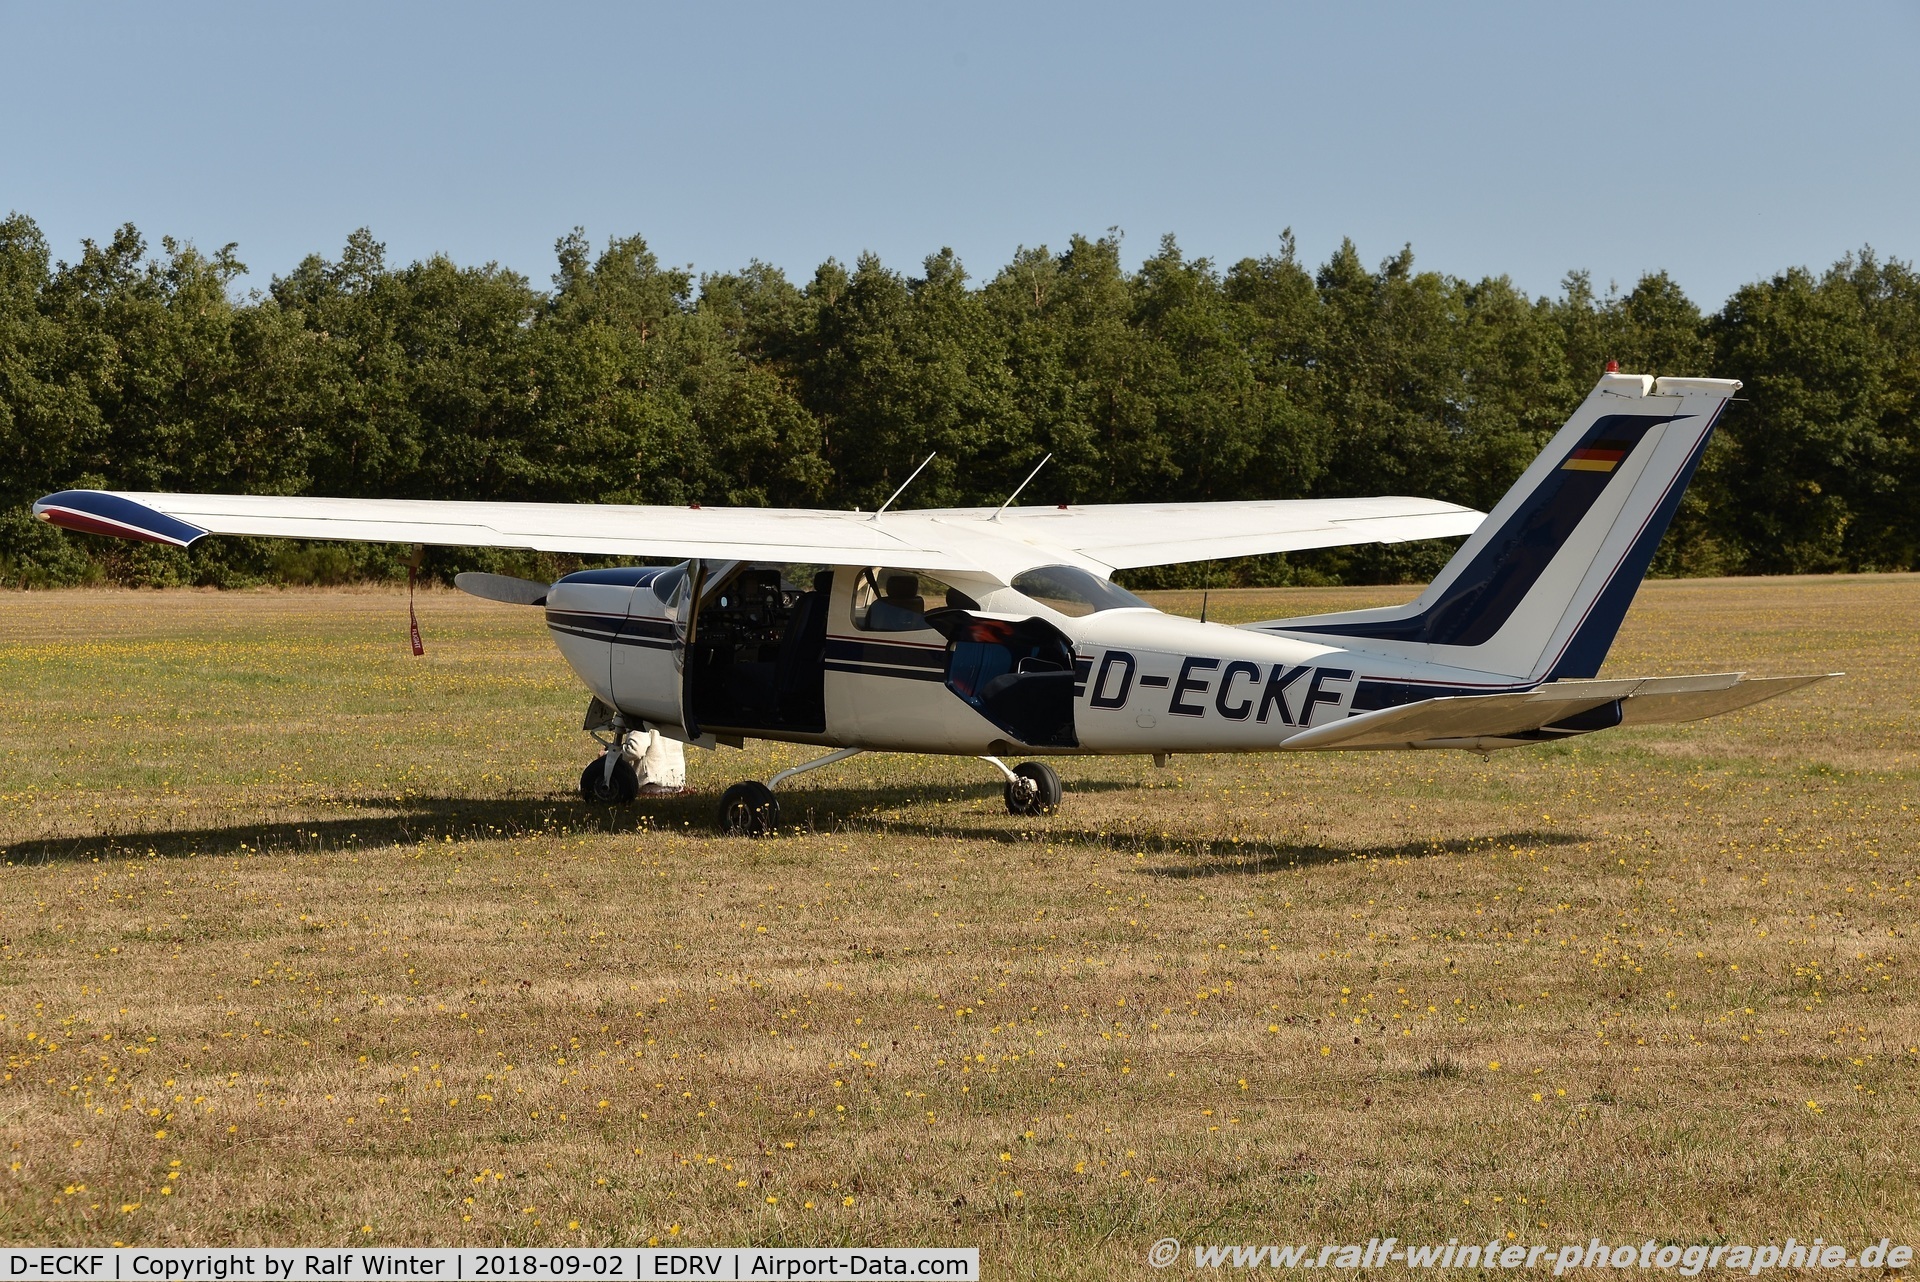 D-ECKF, 1971 Reims F177RG Cardinal RG C/N 0021, Cessna 177RG Cardinal RG - Private - F177RG0021 - D-ECKF - 02.09.2018 - EDRV